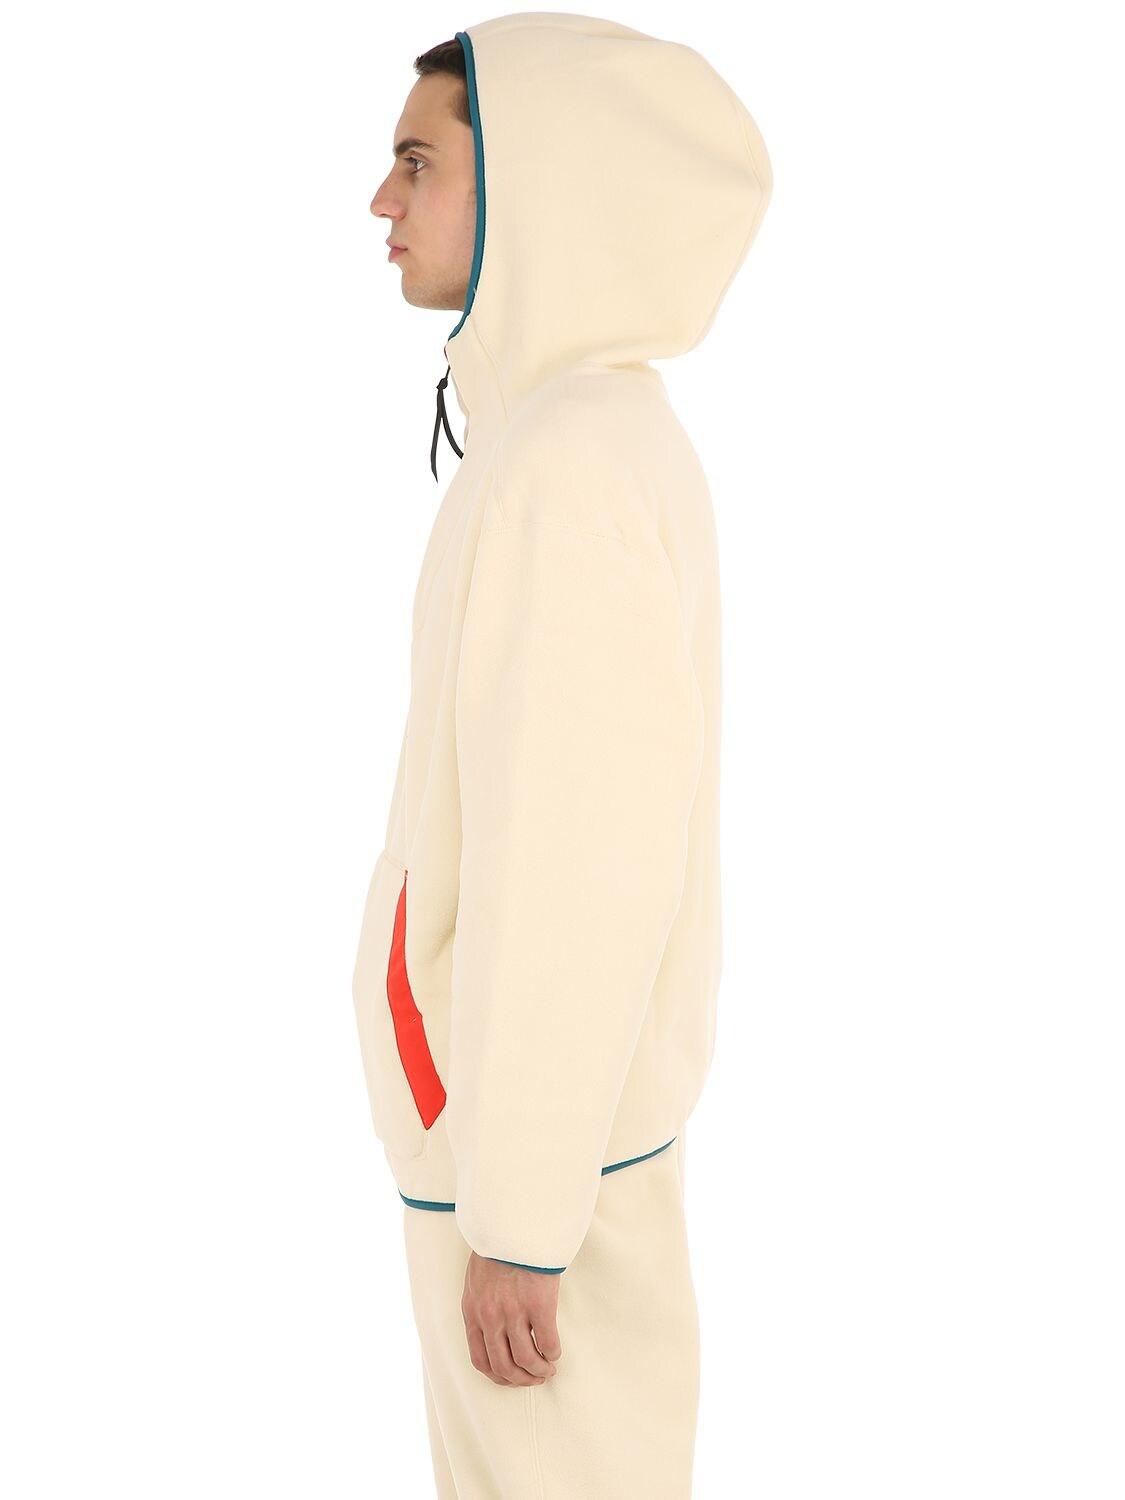 Nike Acg Sherpa Sweatshirt Hoodie in Light Cream (Natural) for Men | Lyst